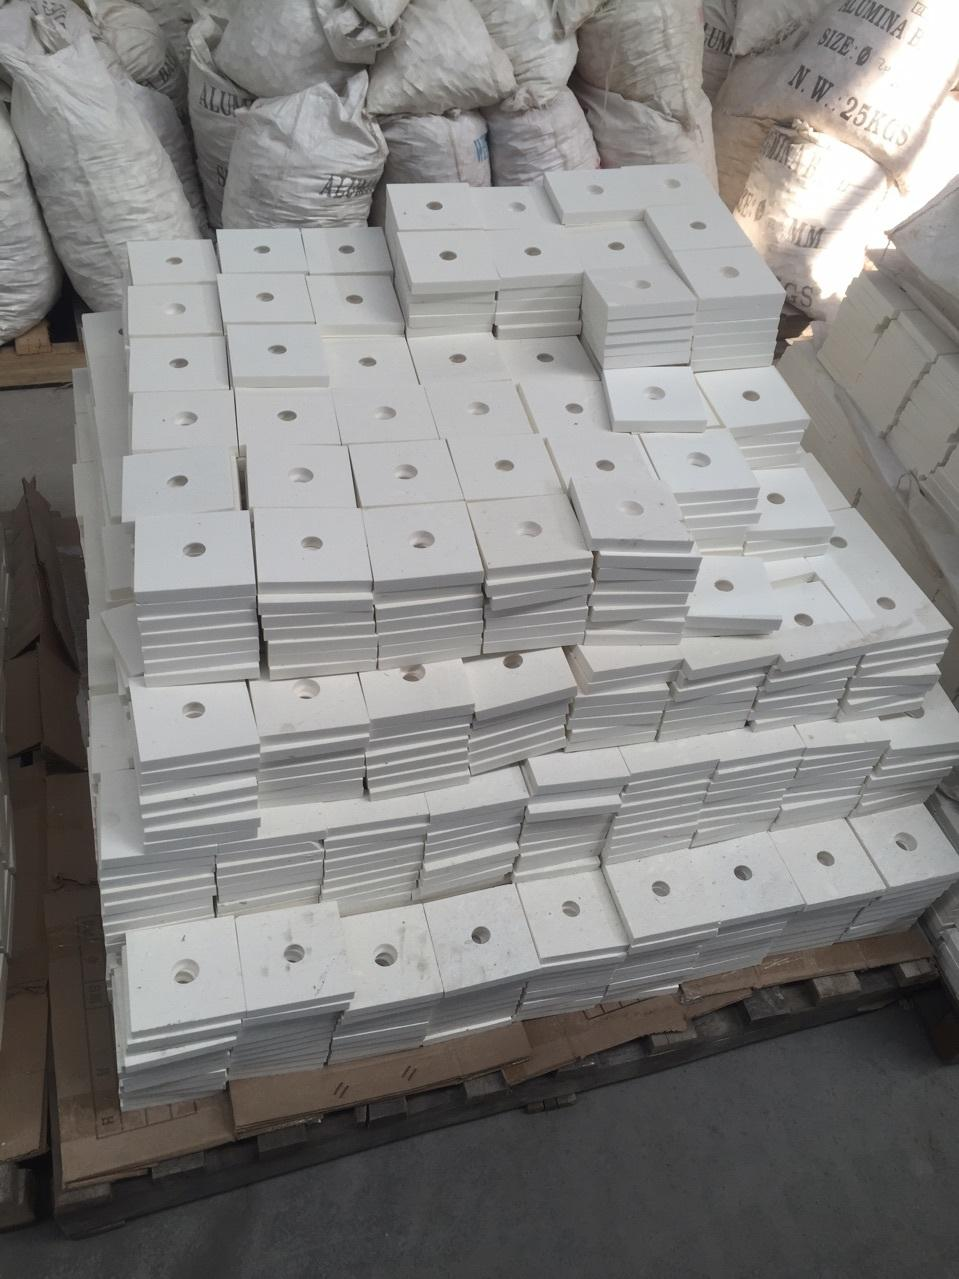 Hot Selling for Daily Use Water Flosser -
 Alumina ceramic tiles – ZhongPeng